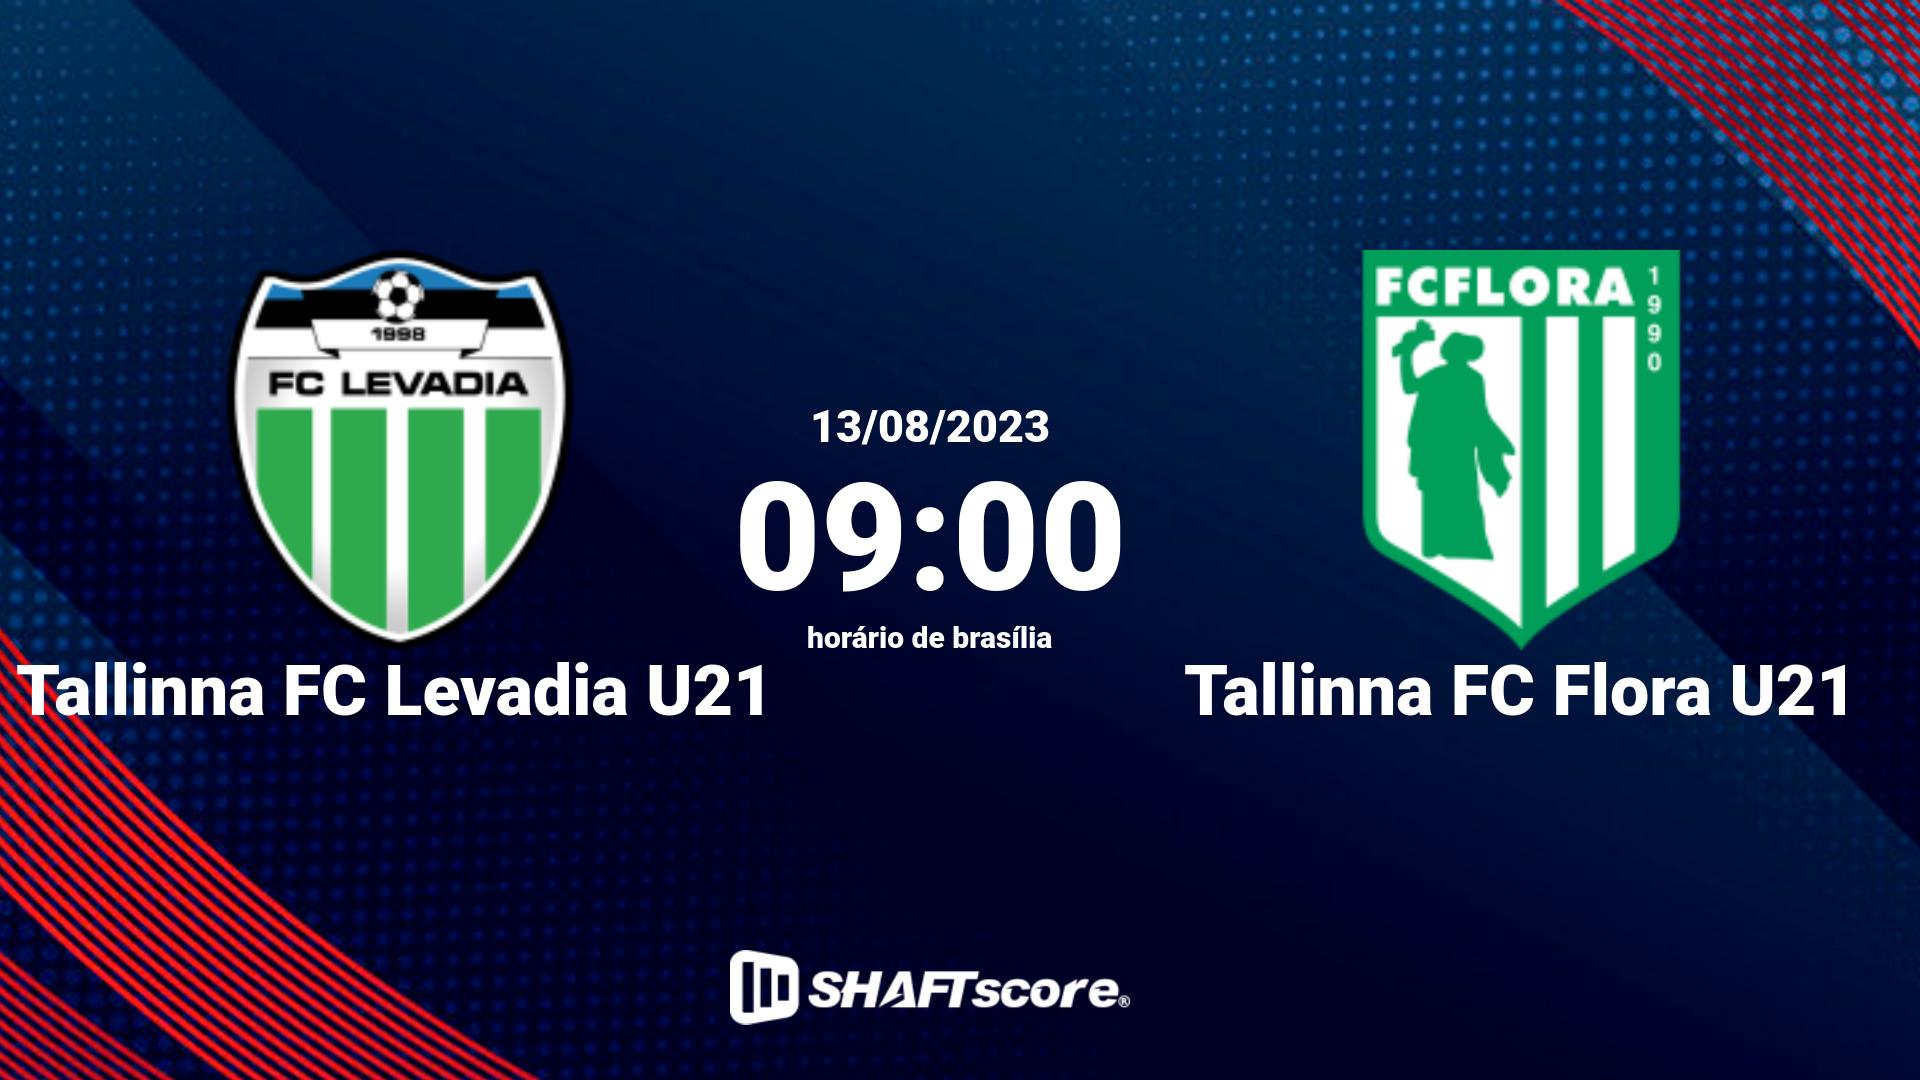 Estatísticas do jogo Tallinna FC Levadia U21 vs Tallinna FC Flora U21 13.08 09:00